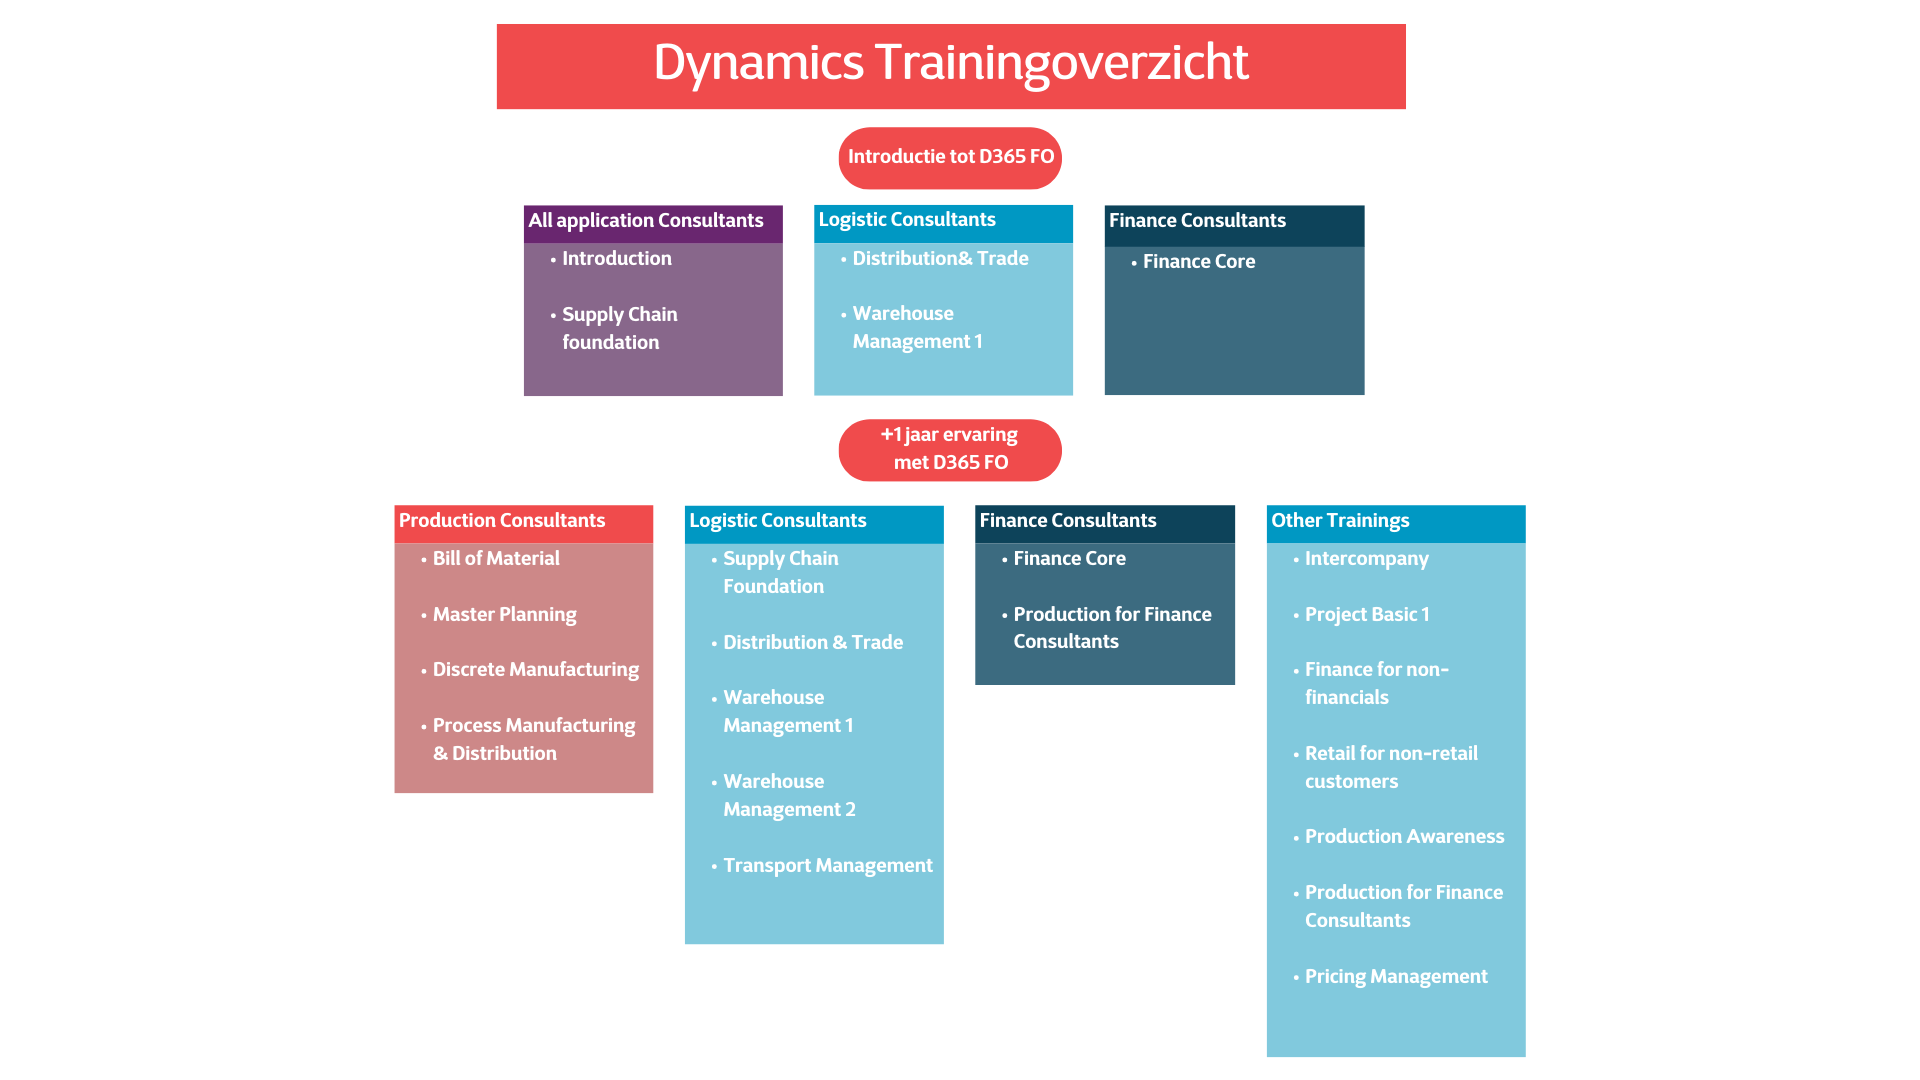 Dynamics Academy Training overzicht